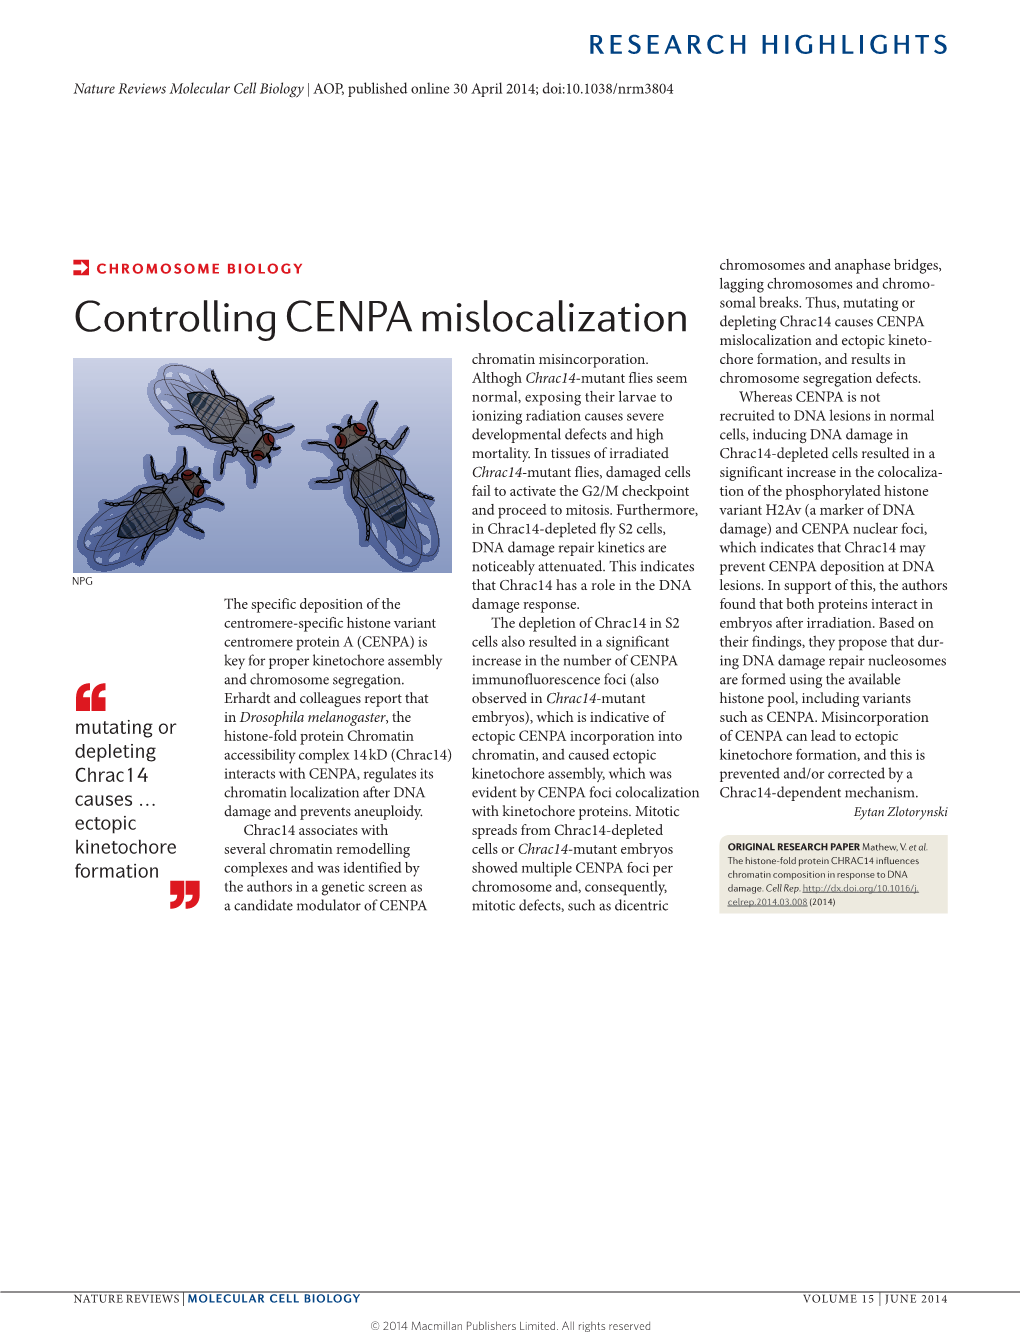 Chromosome Biology: Controlling CENPA Mislocalization